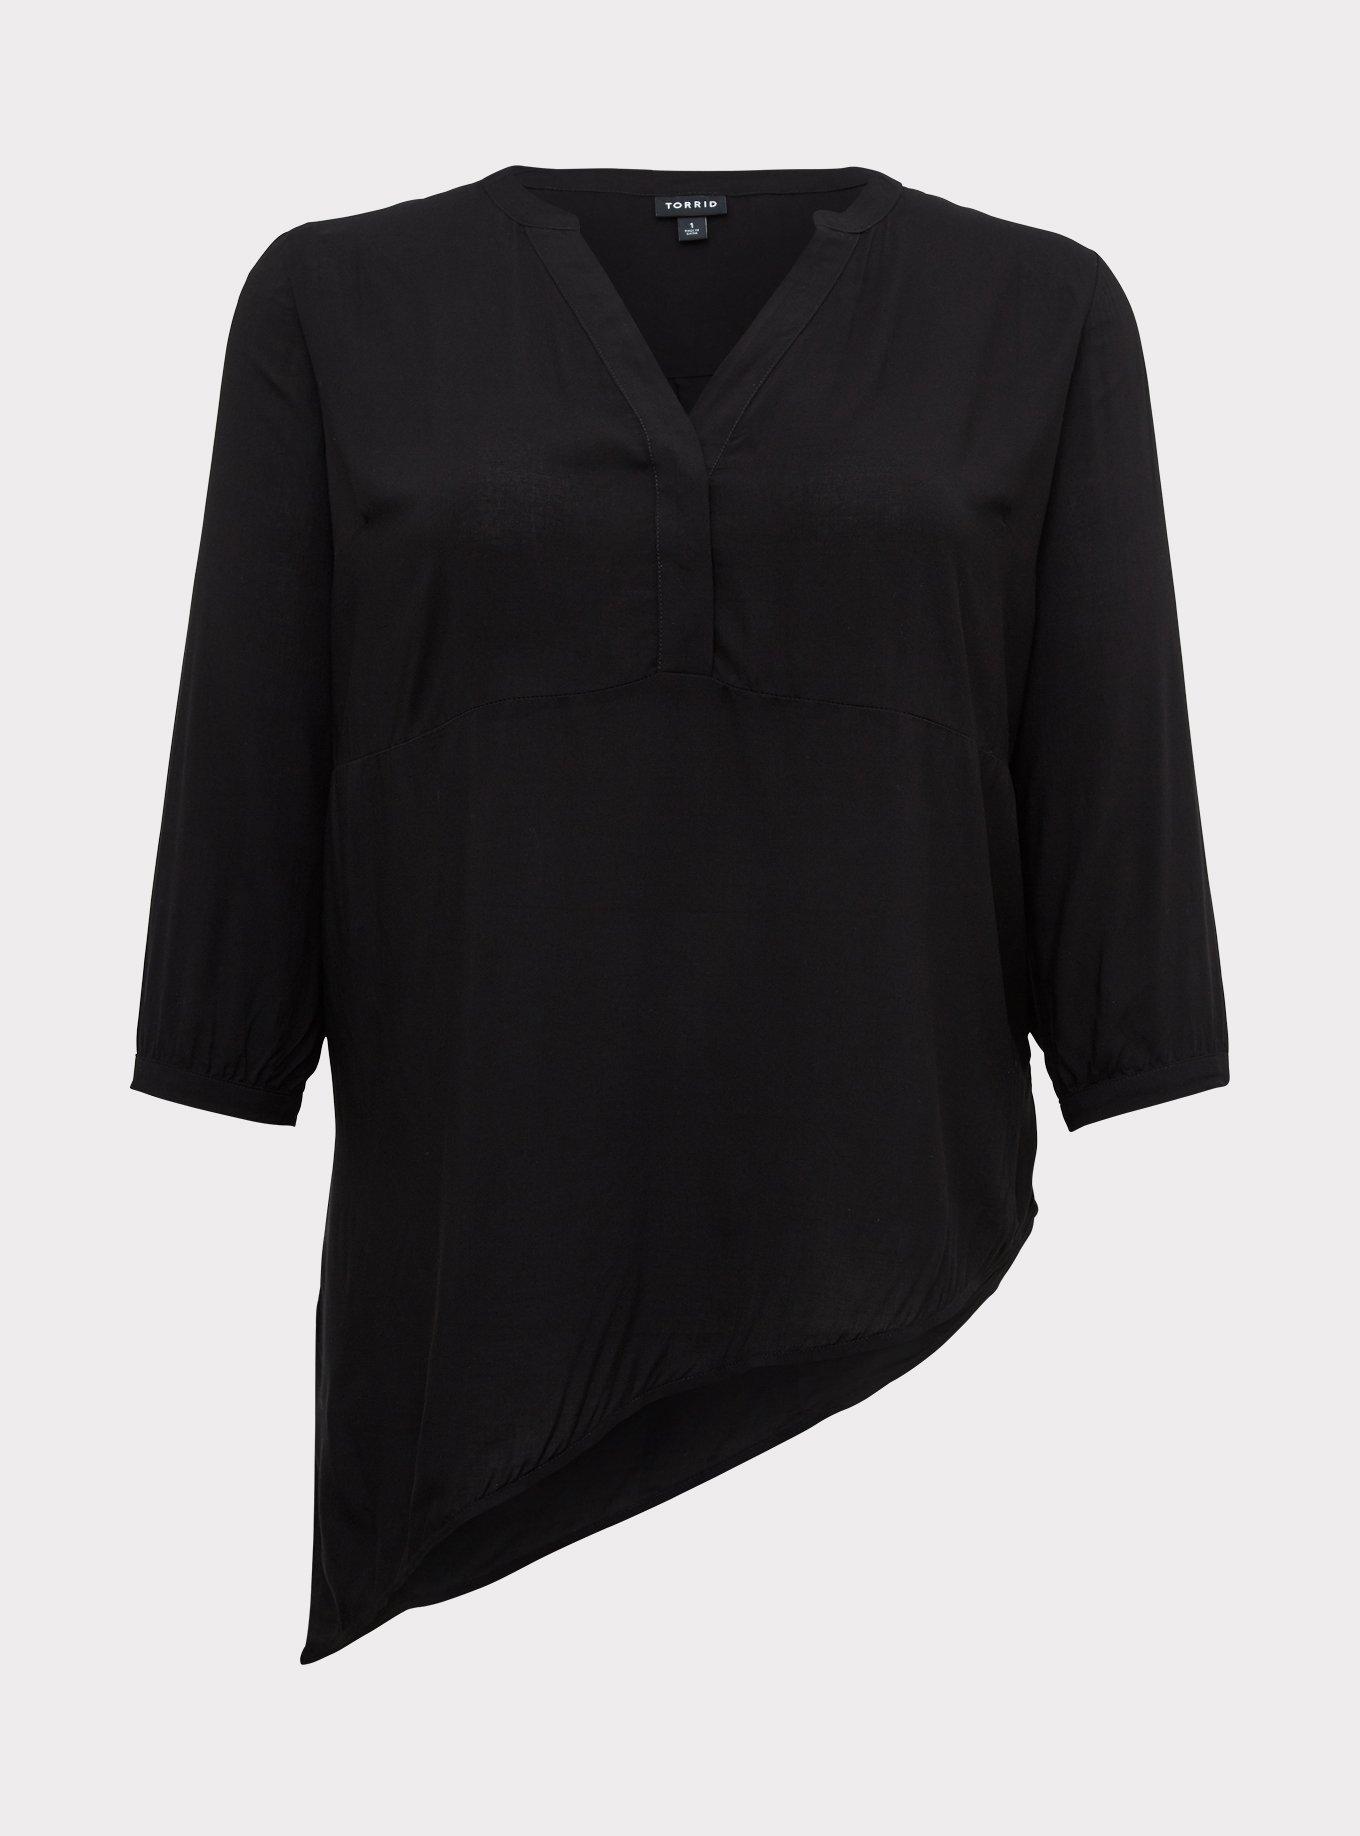 Plus Size - Black Challis Asymmetrical Tunic Blouse - Torrid